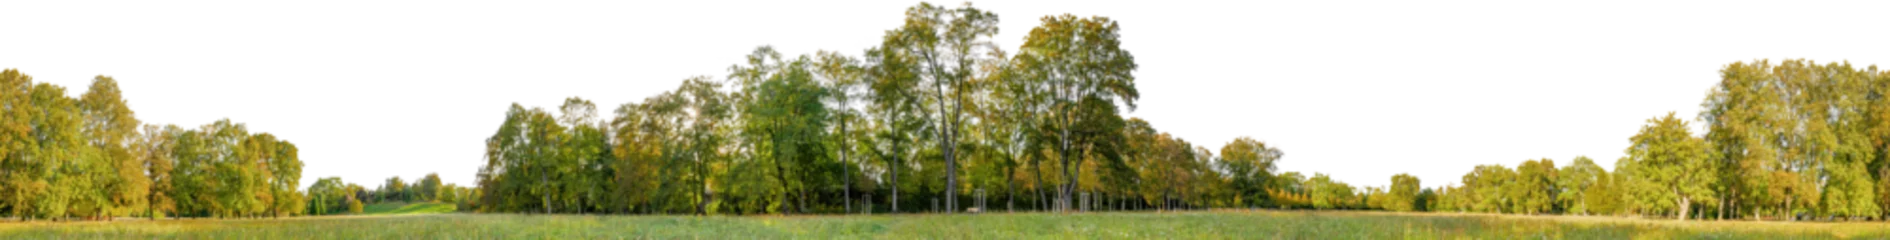 Fotobehang tree line trees autumn xl horizontal seamless arch viz cutout © Mathias Weil